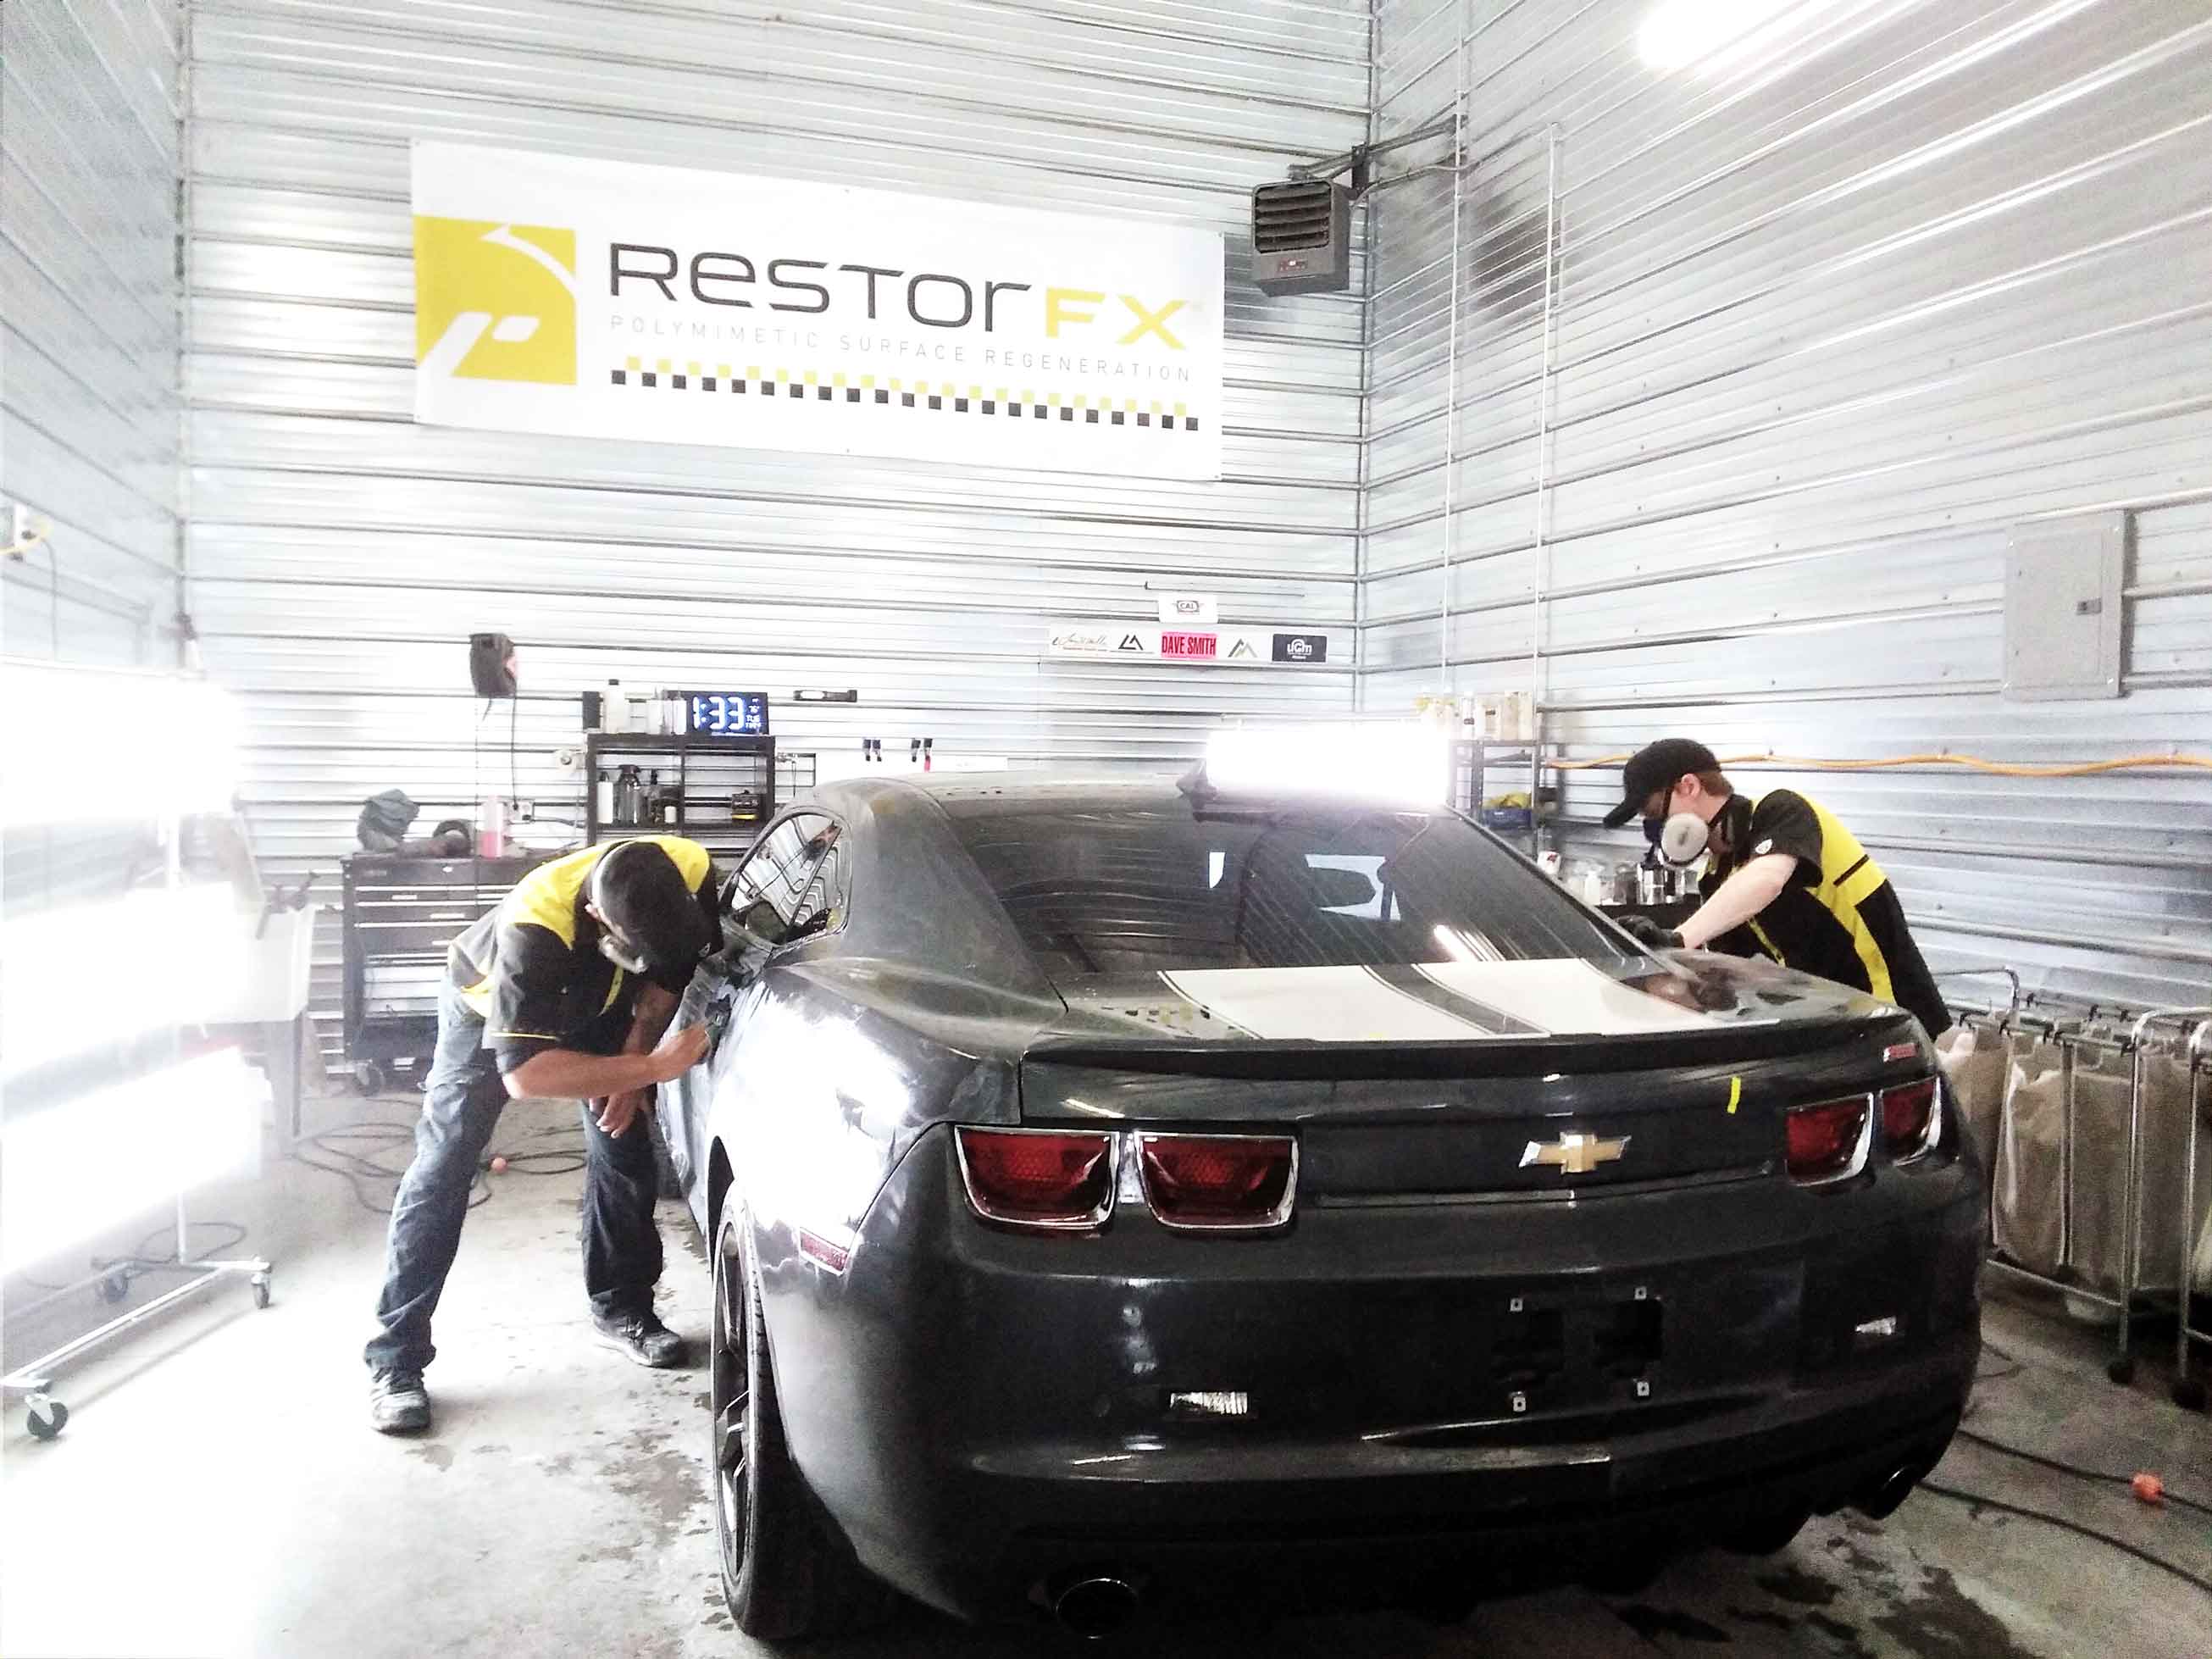 Technicians restoring black Camaro in brightly lit shop area at RestorFX Spokane with branded wall